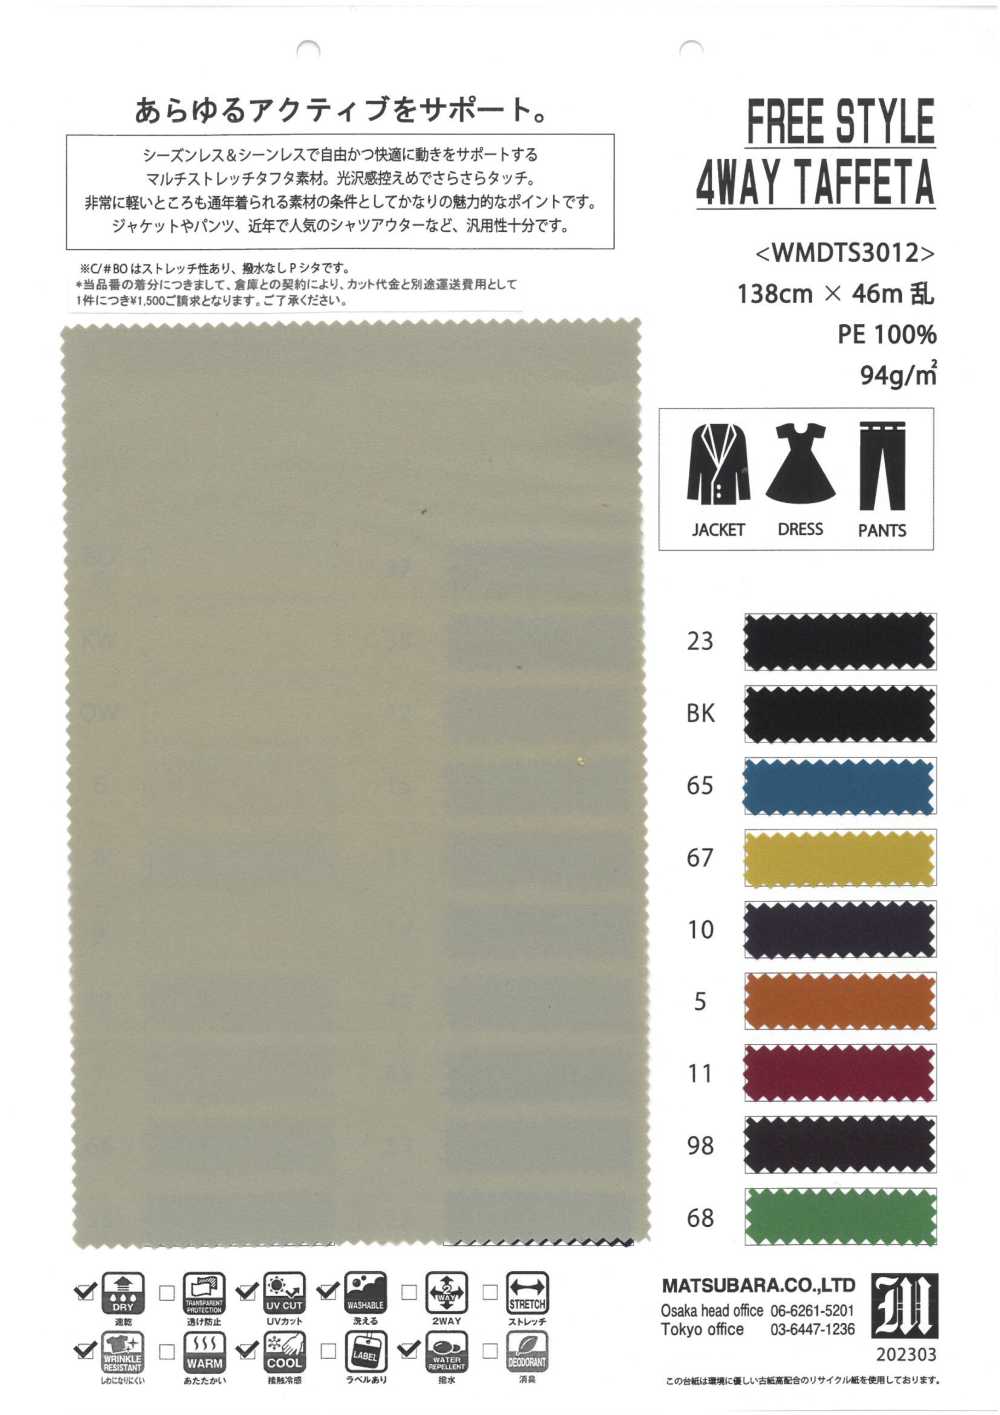 WMDTS3012 TAFETÁN FREE STYLE AWAY[Fabrica Textil] Matsubara